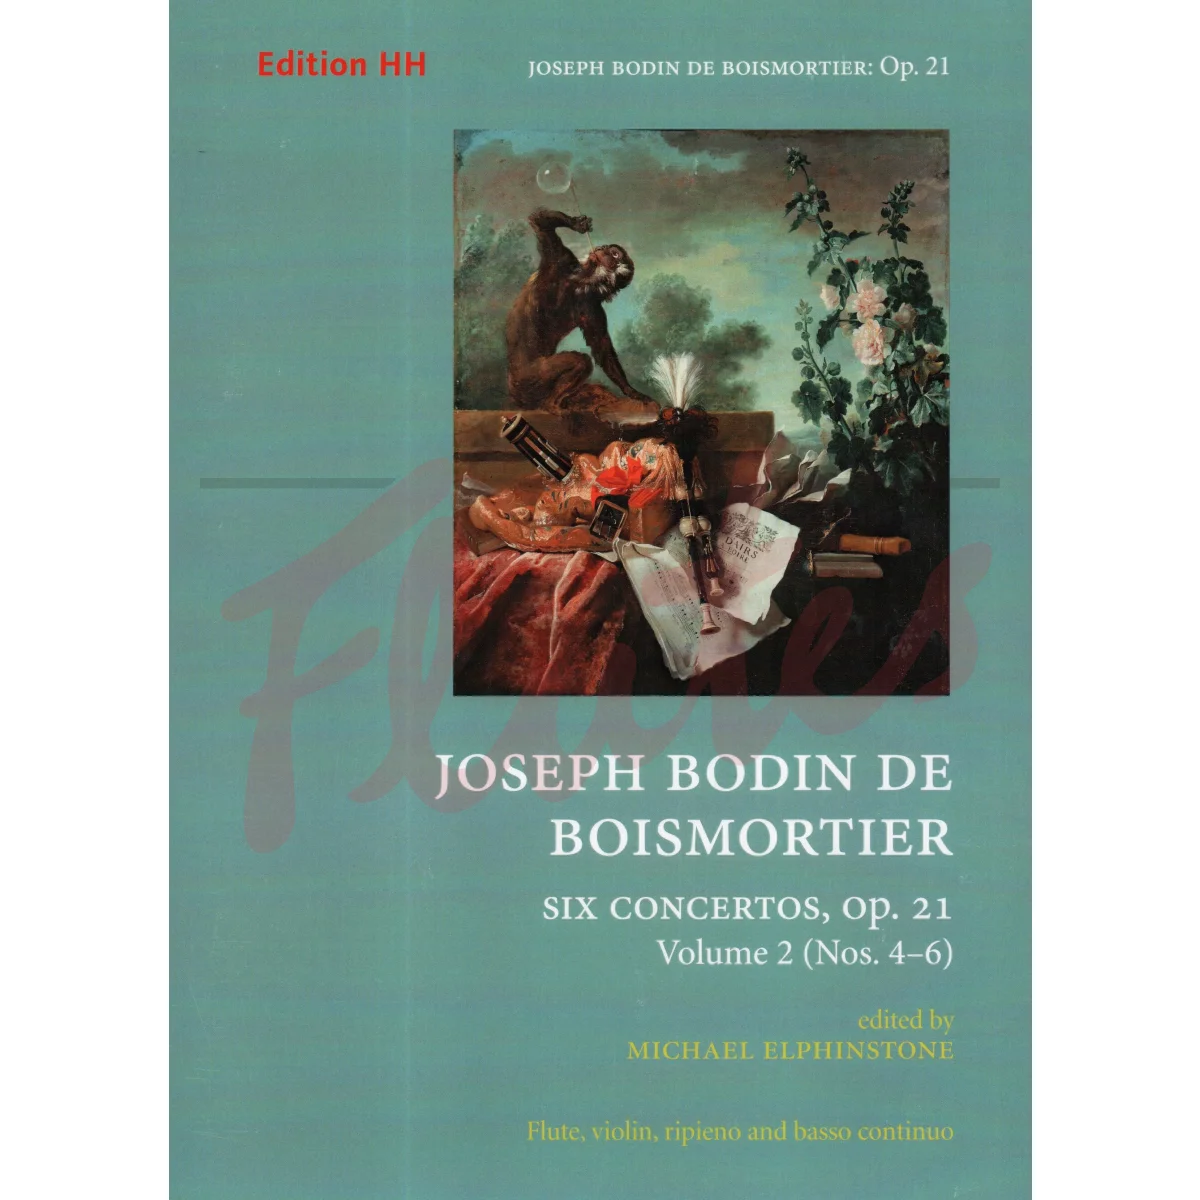 Six Concertos Volume 2 for Flute, Violin, ripieno and basso ontinuo